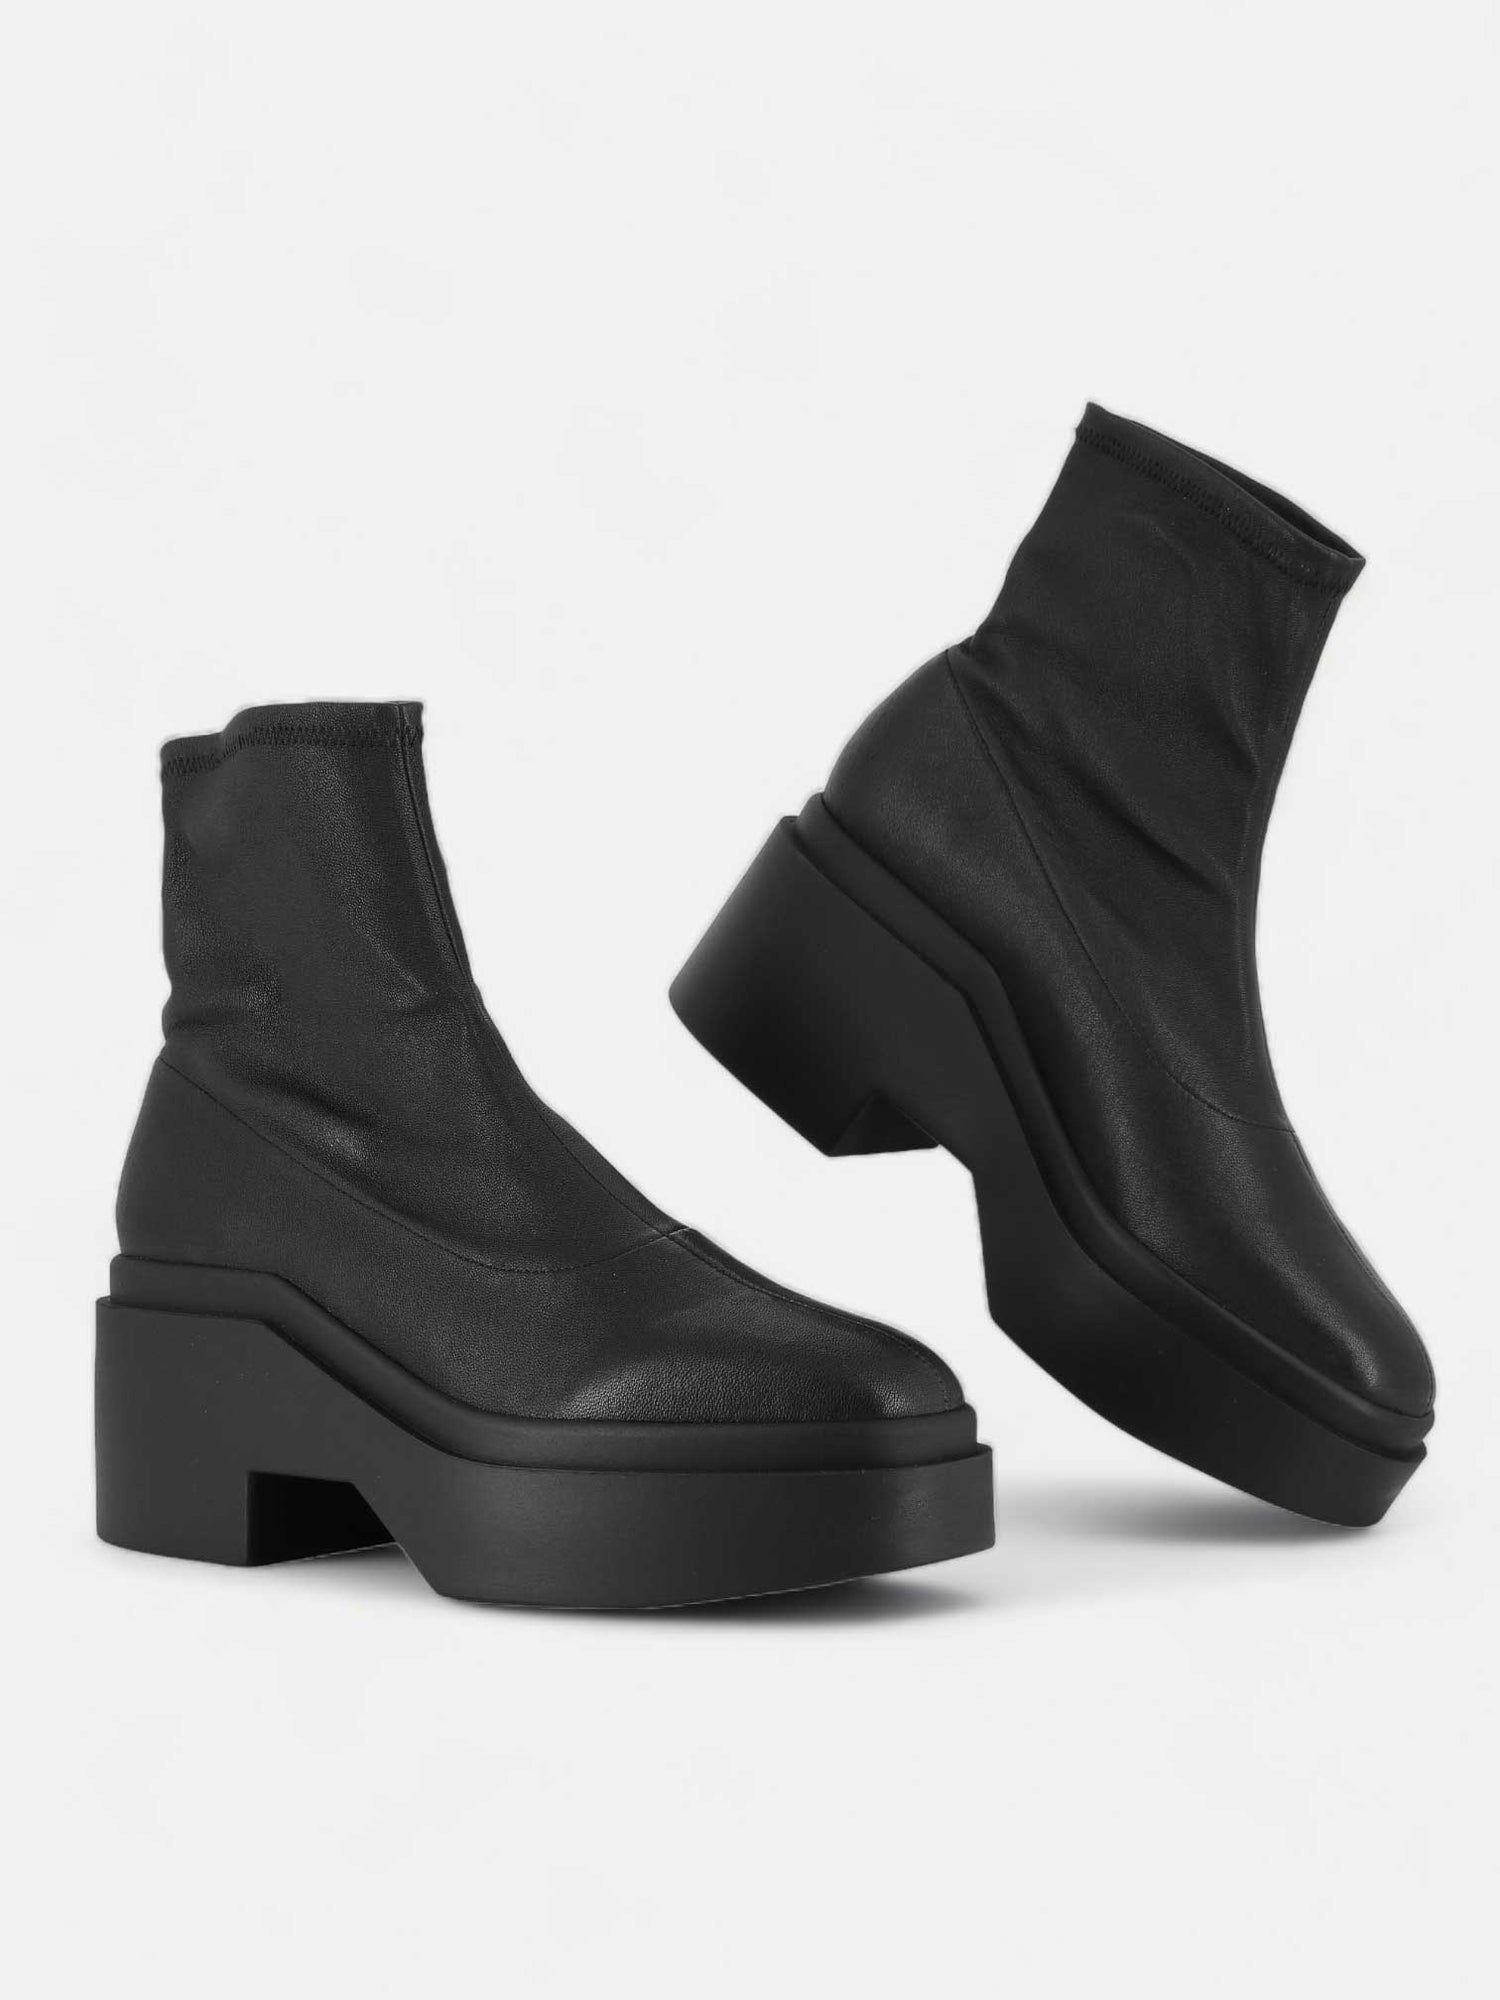 ANKLE BOOTS - NELLE ankle boots, stretch lambskin black - NELLEBLKNPSM340 - Clergerie Paris - USA